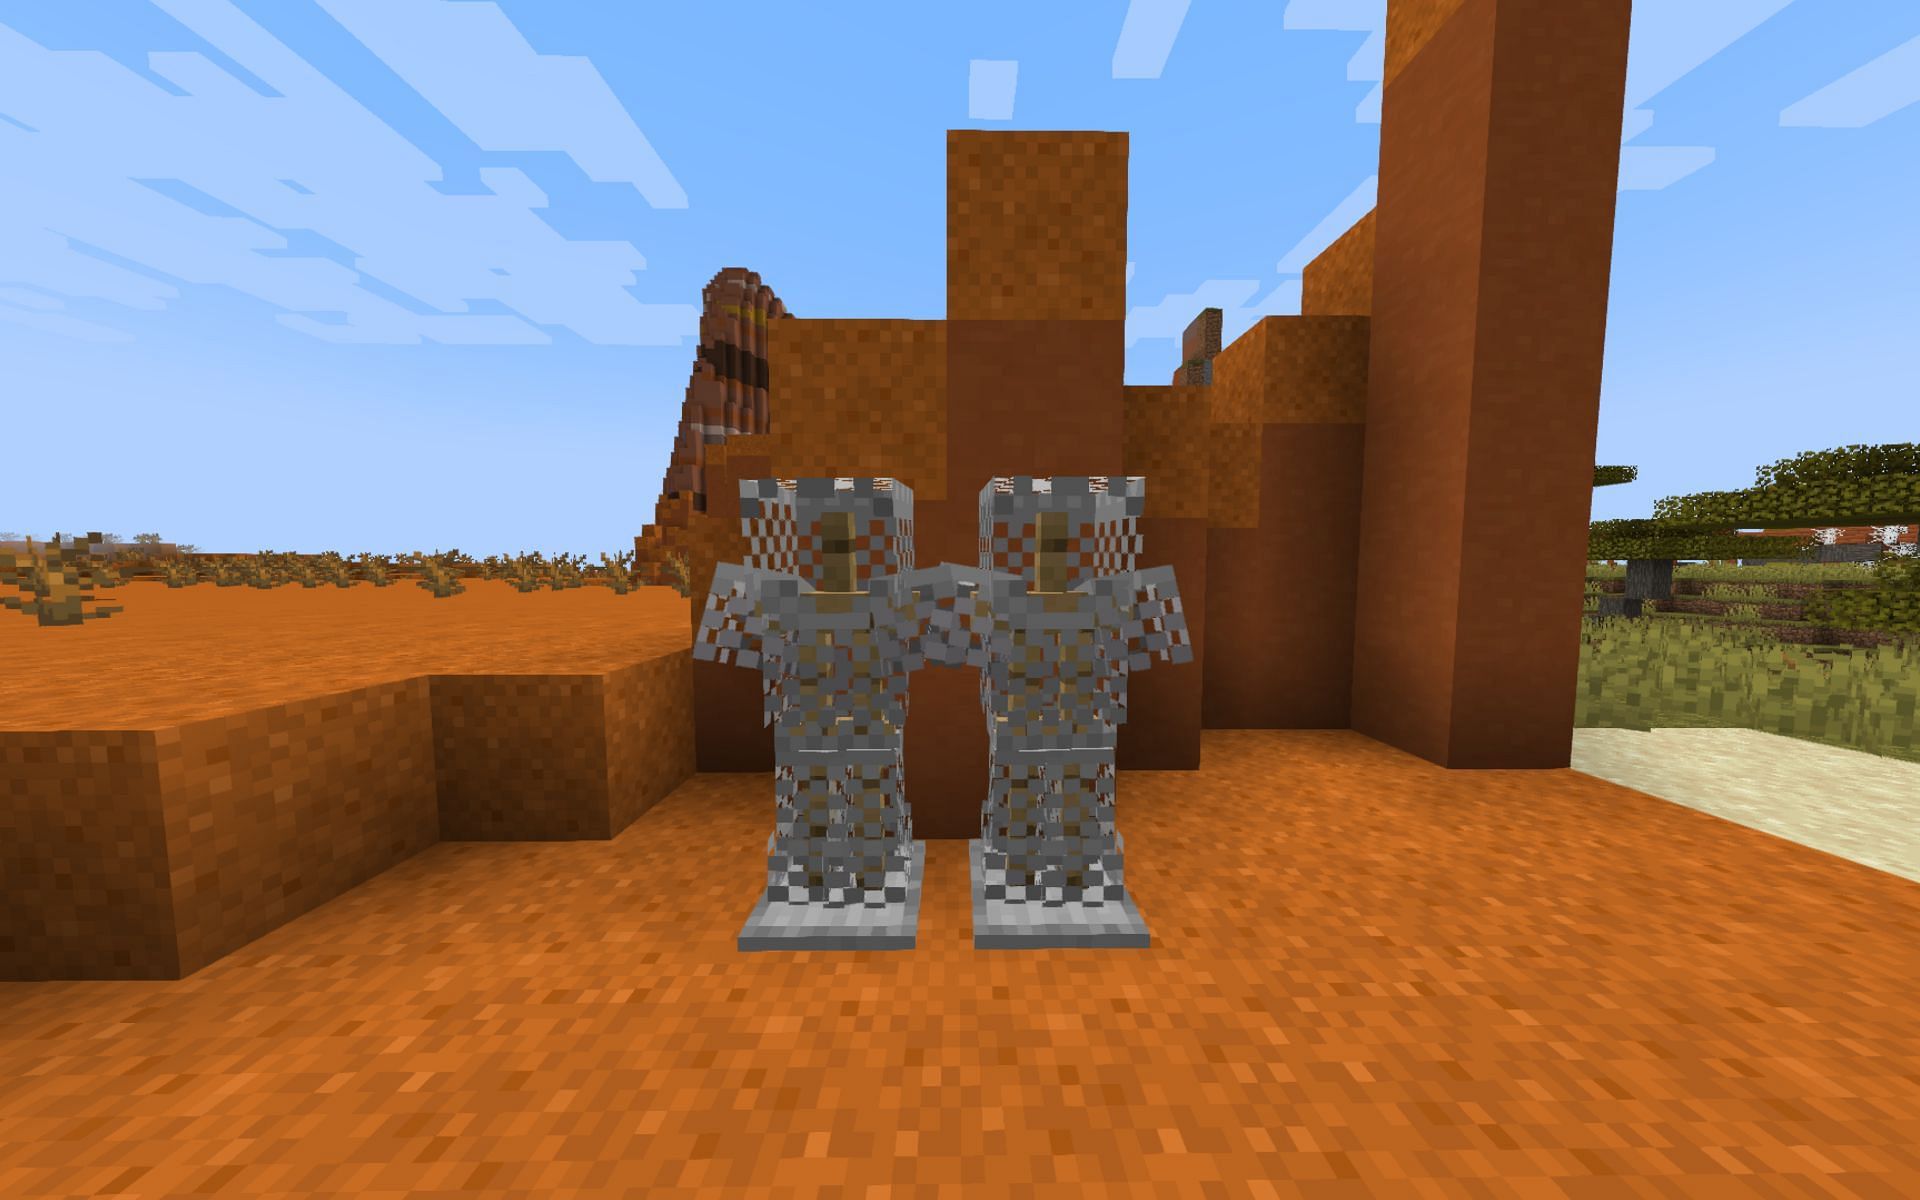 minecraft chain armor vs iron